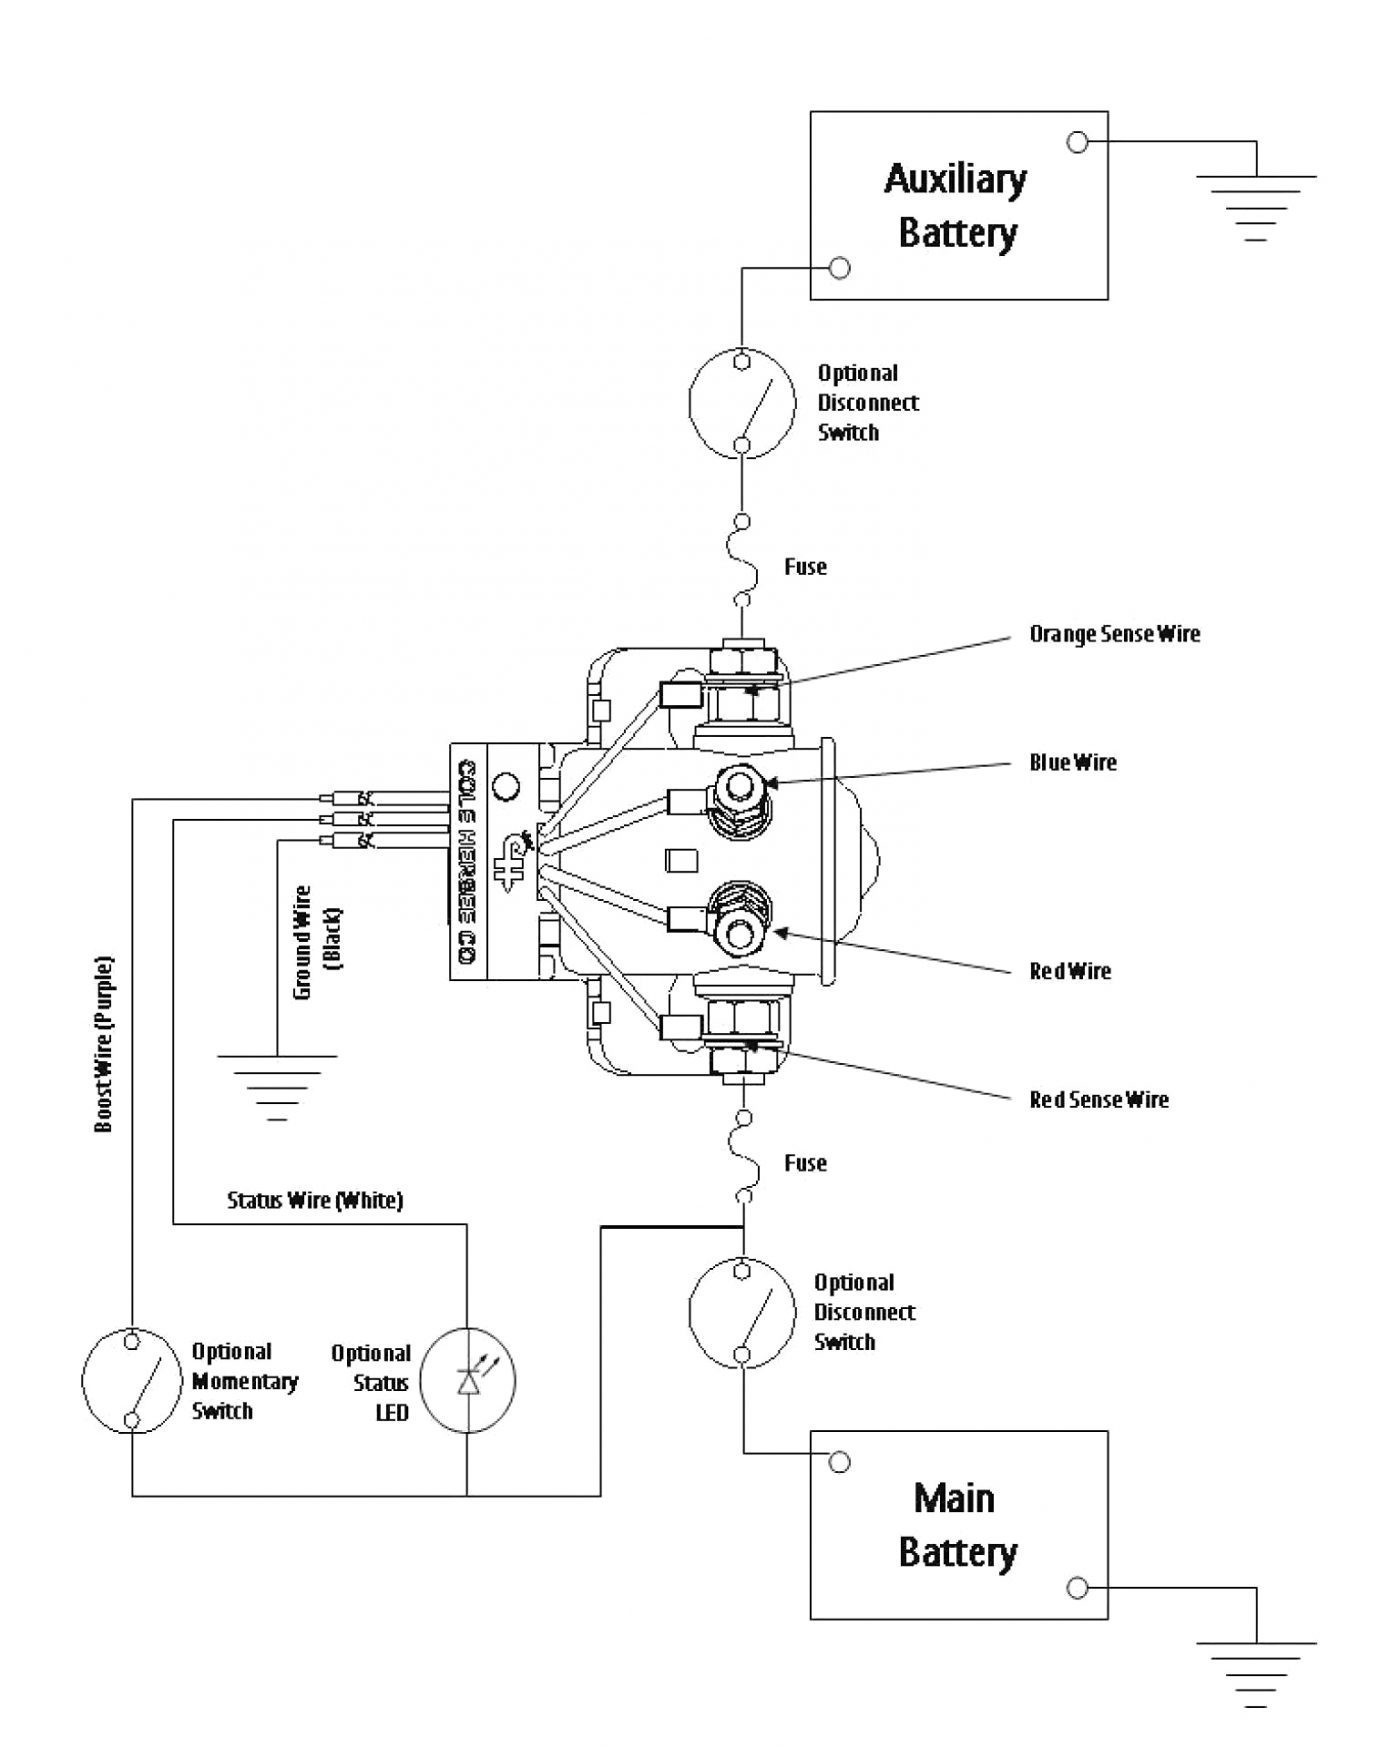 Battery isolator Wiring Diagram Fresh Battery isolator Wiring Diagram